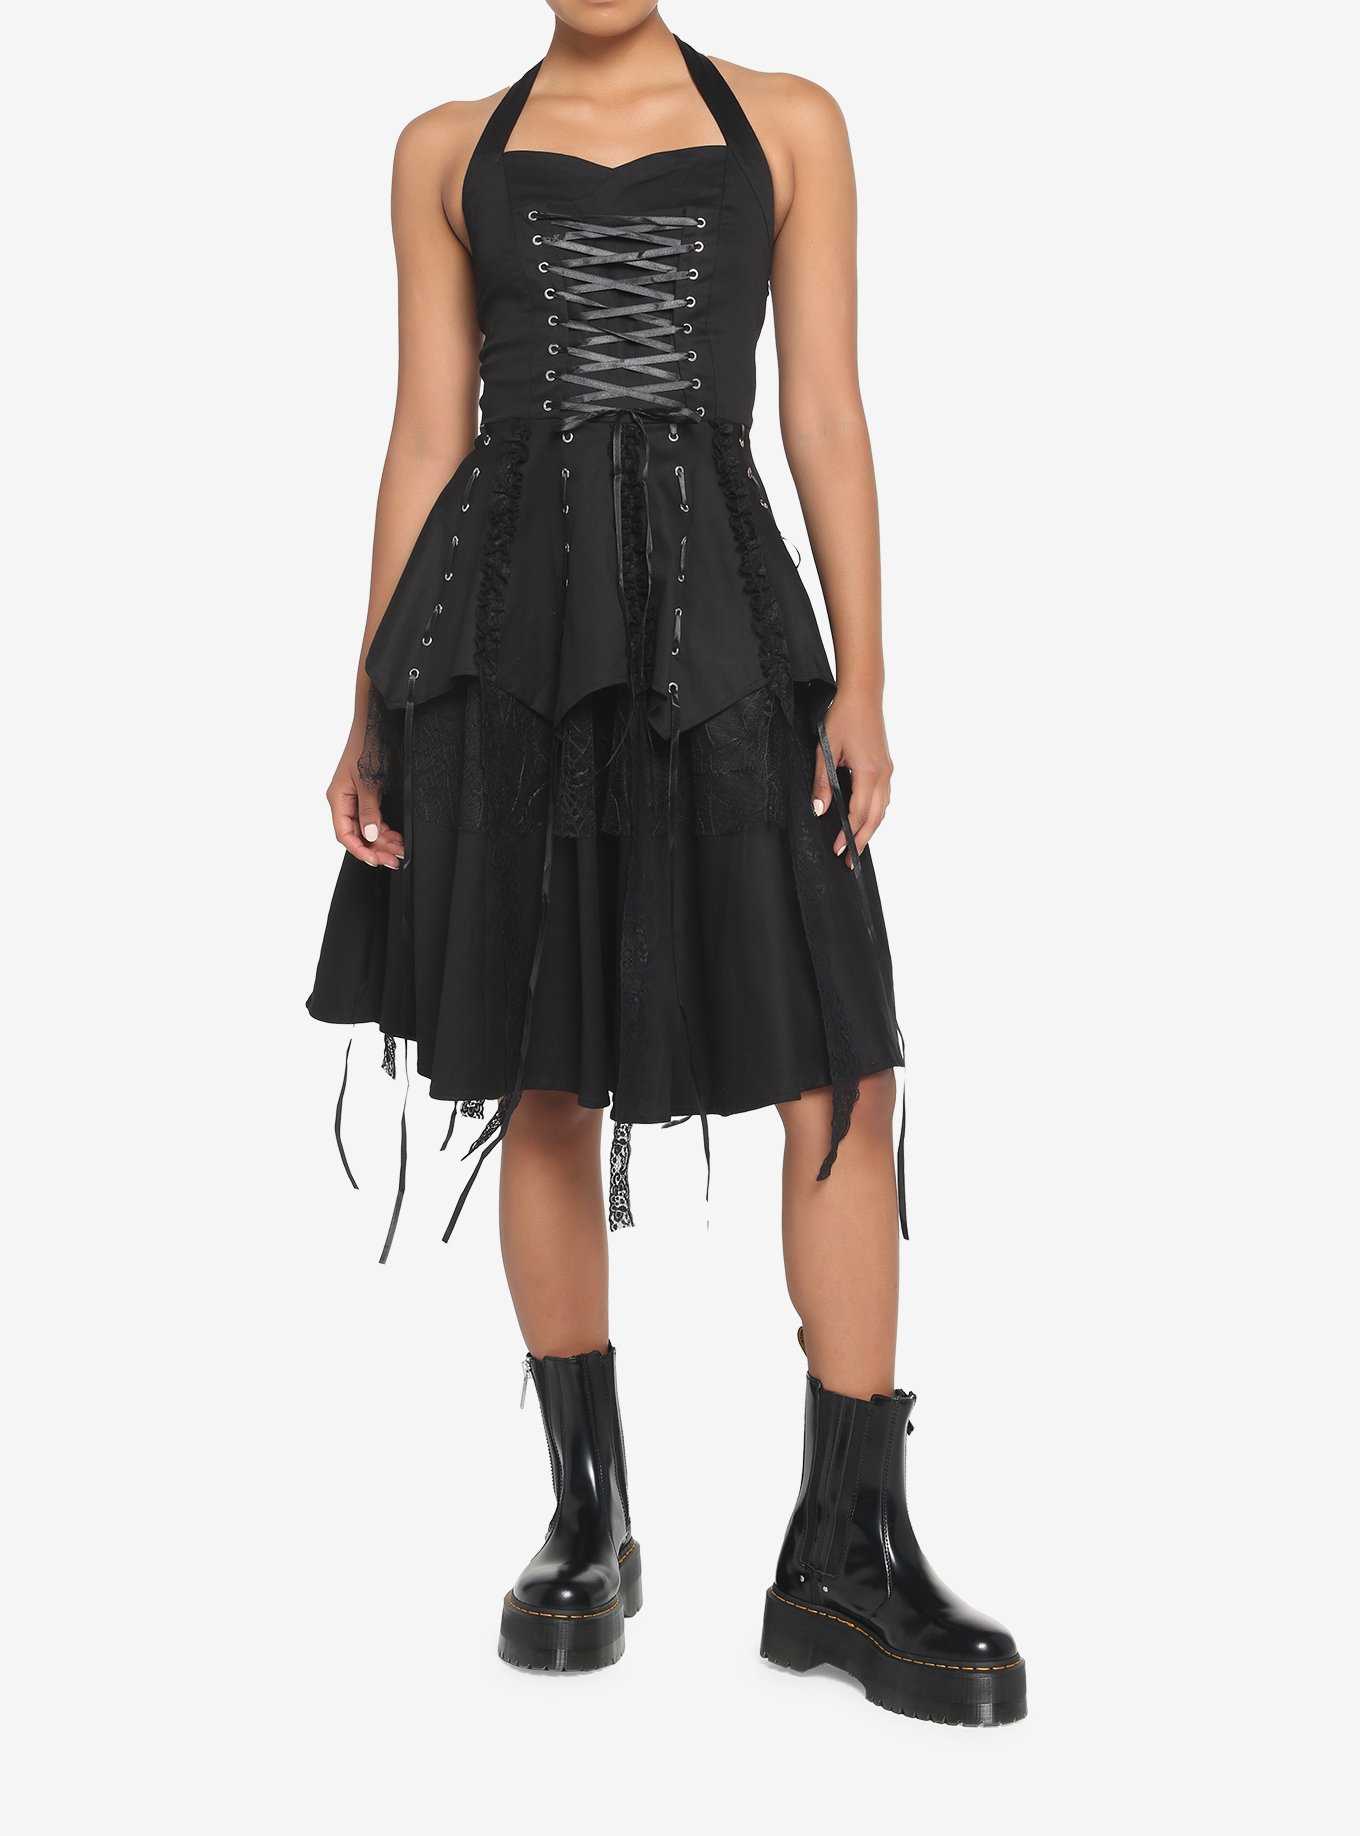 Black Gothic Tiered Halter Dress, , hi-res